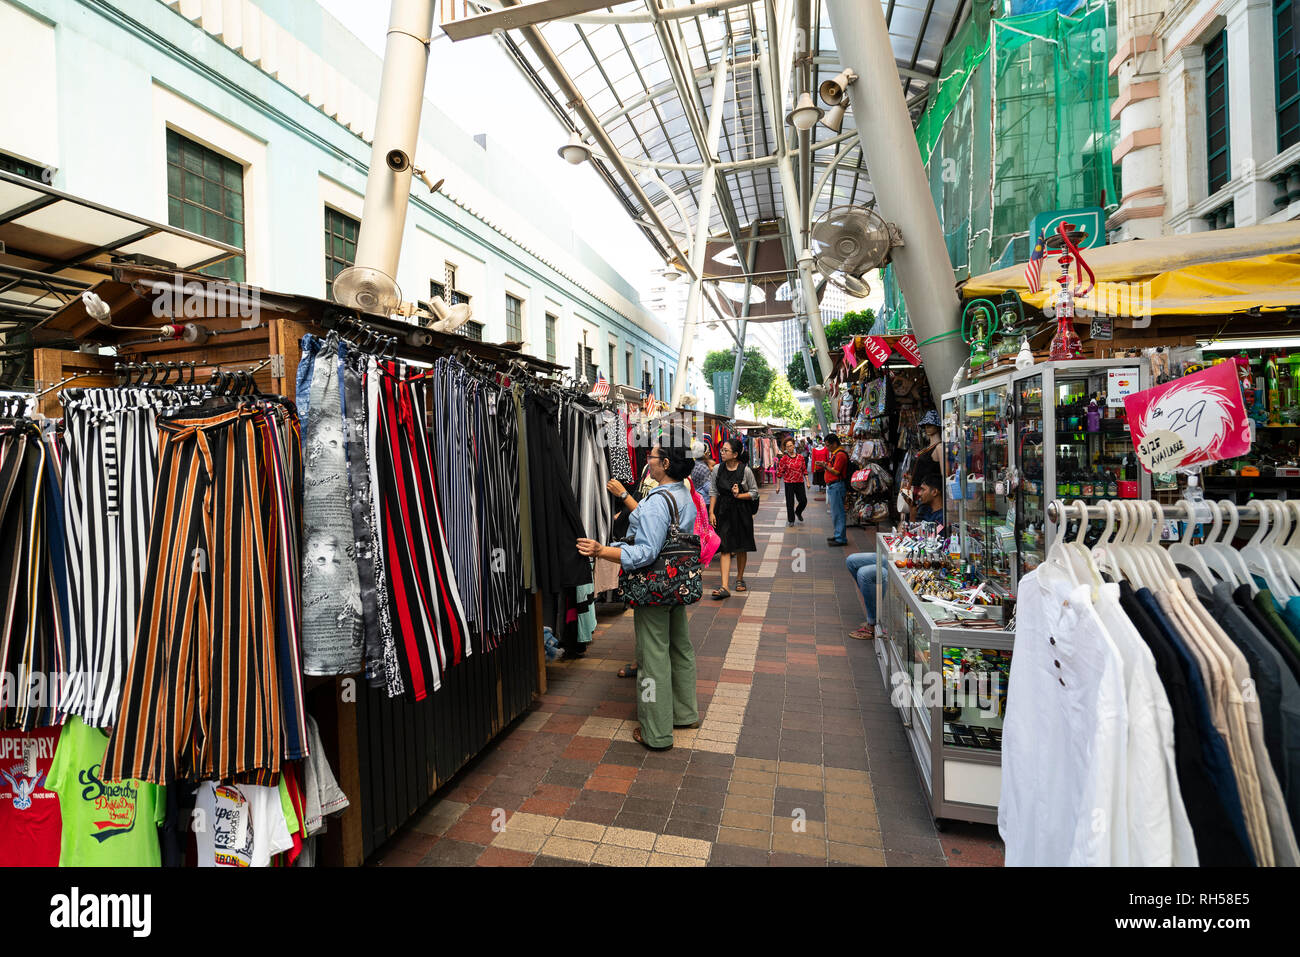 A view of the people in Petaling Street Market in Kuala Lumpur, Malaysia Stock Photo